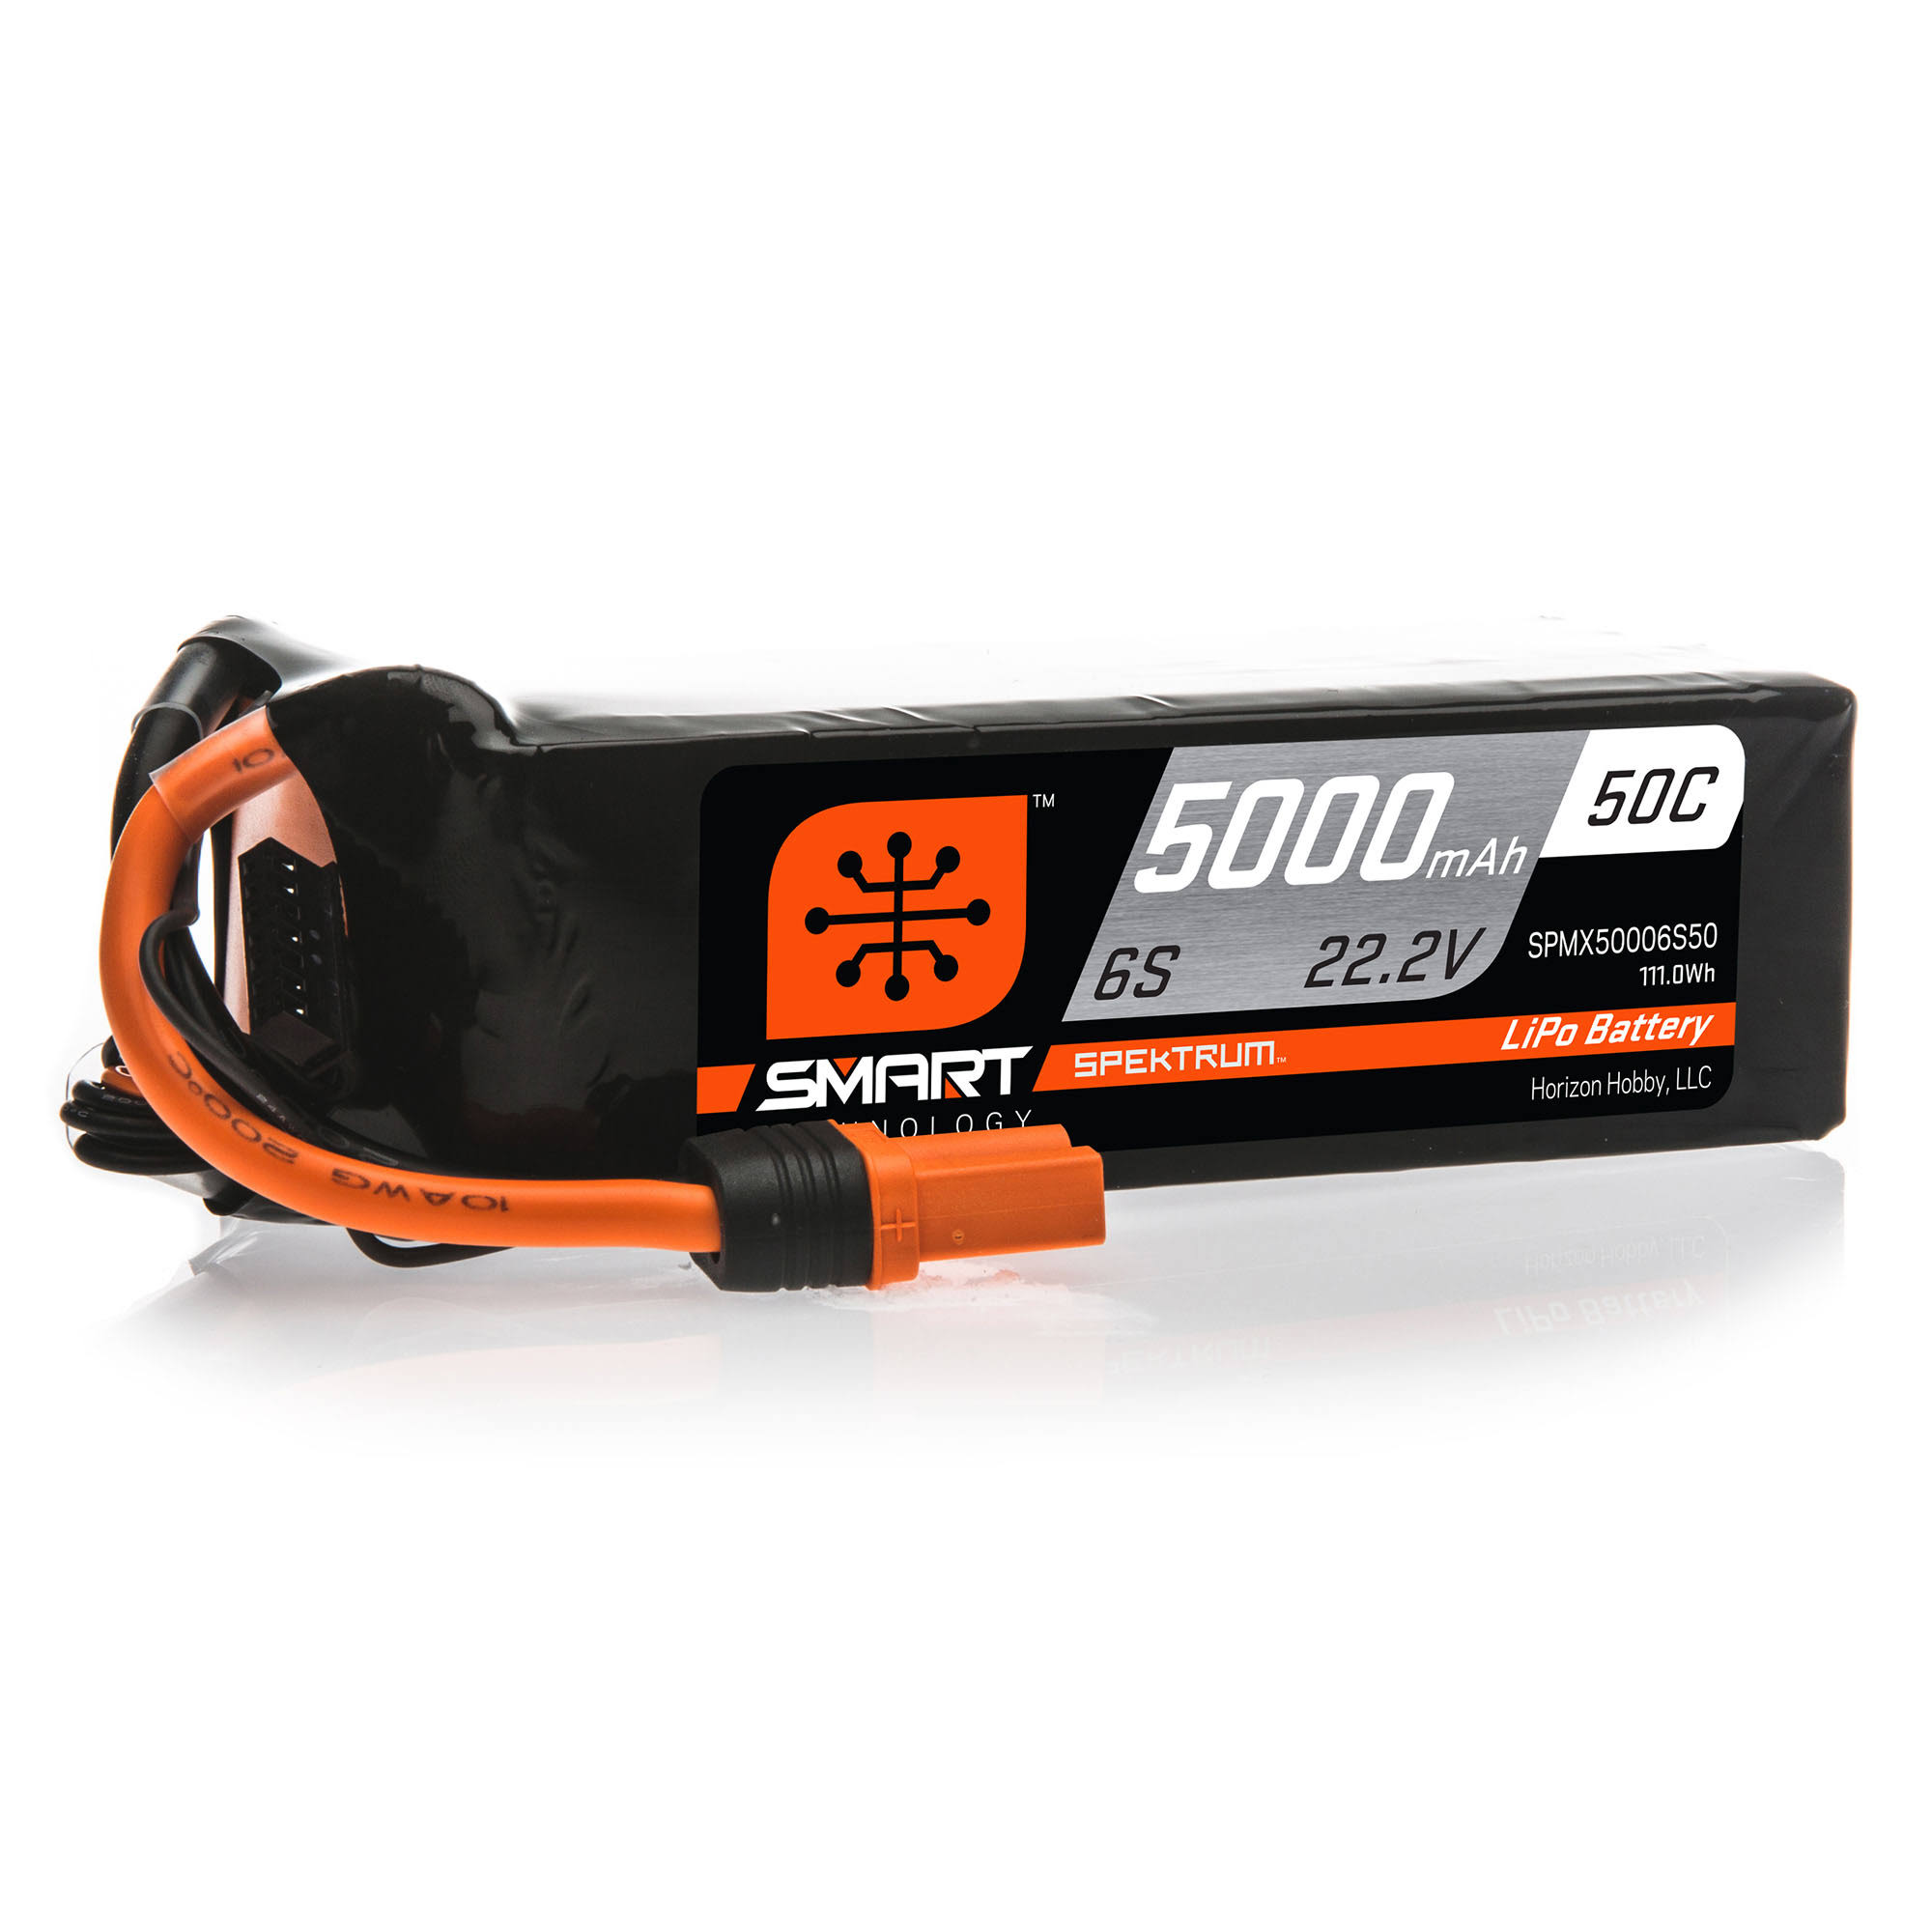 Spektrum Battery 5000mAh 6S 22.2V 50C Smart Lipo IC5/SPMX50006S50